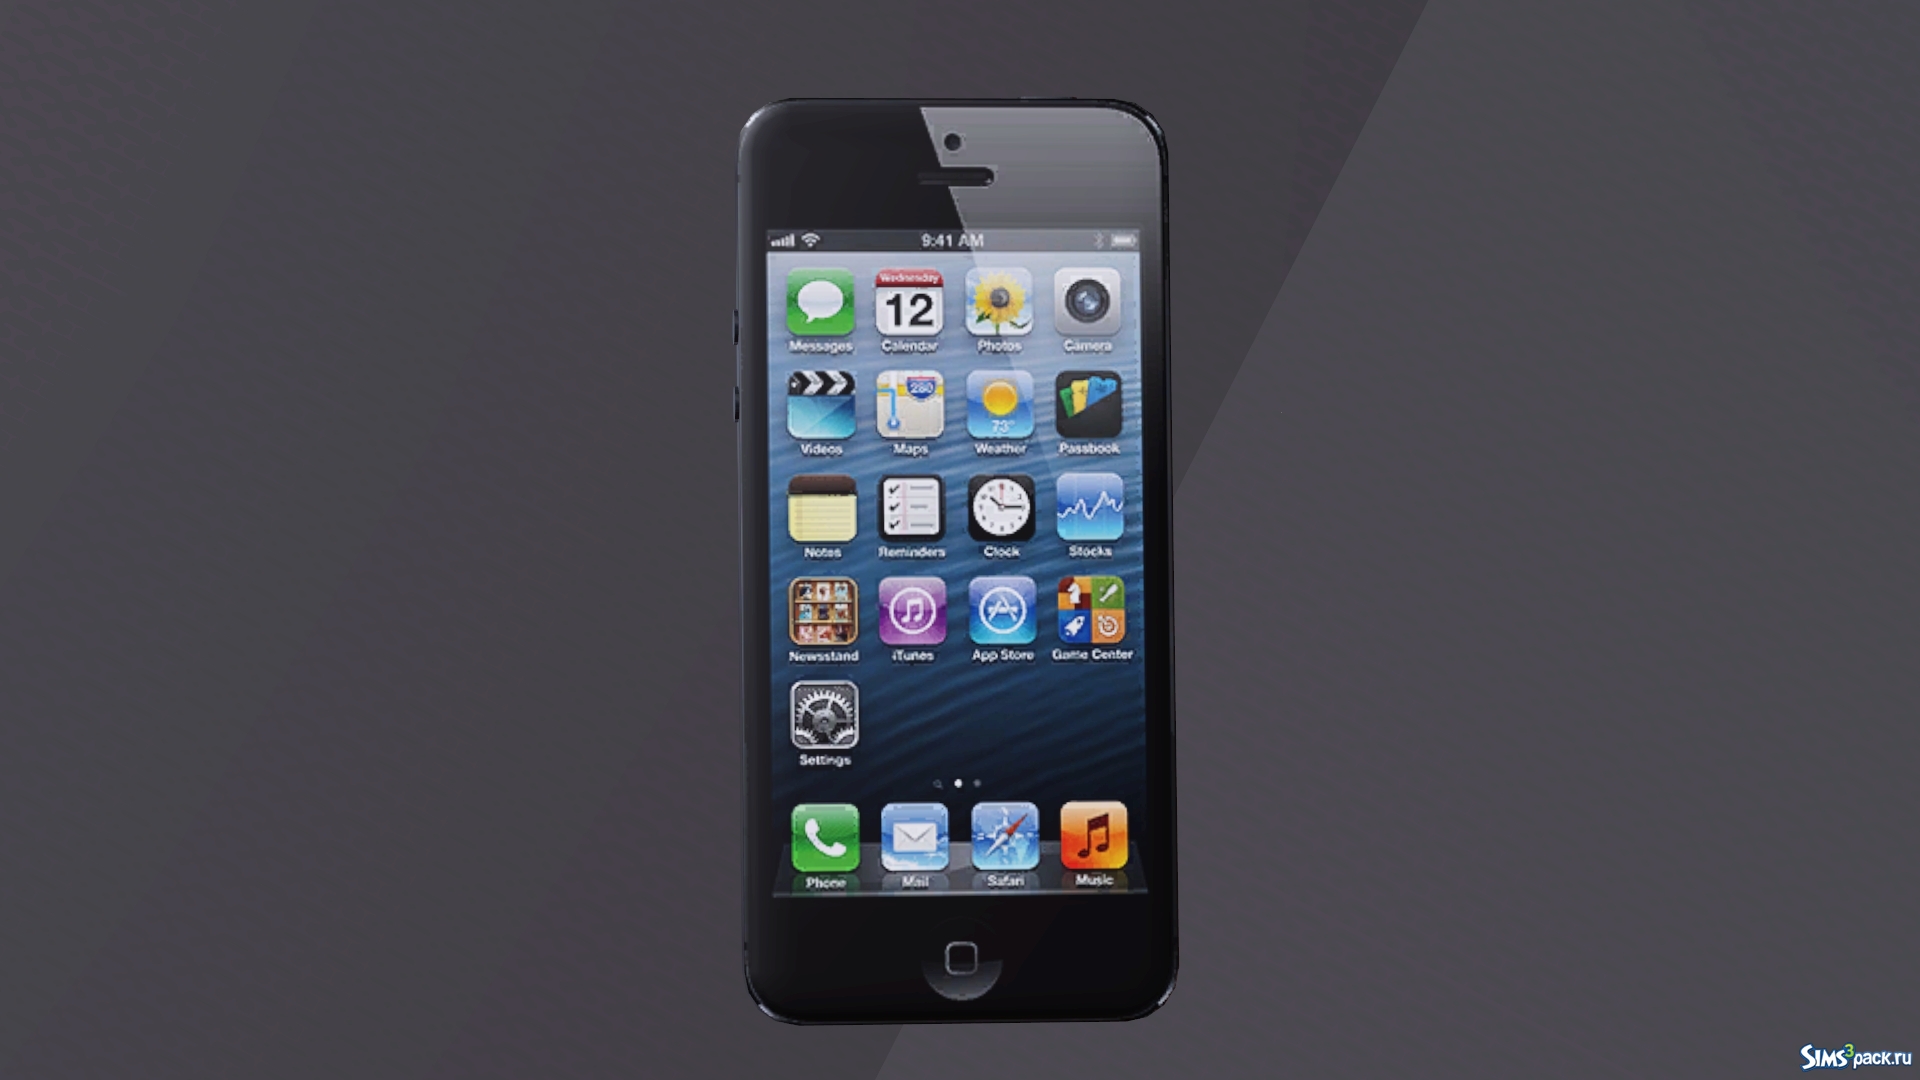 Iphone demo. Apple iphone 5. Айфон 3г. Айфон 3. Iphone 3 g SIM.